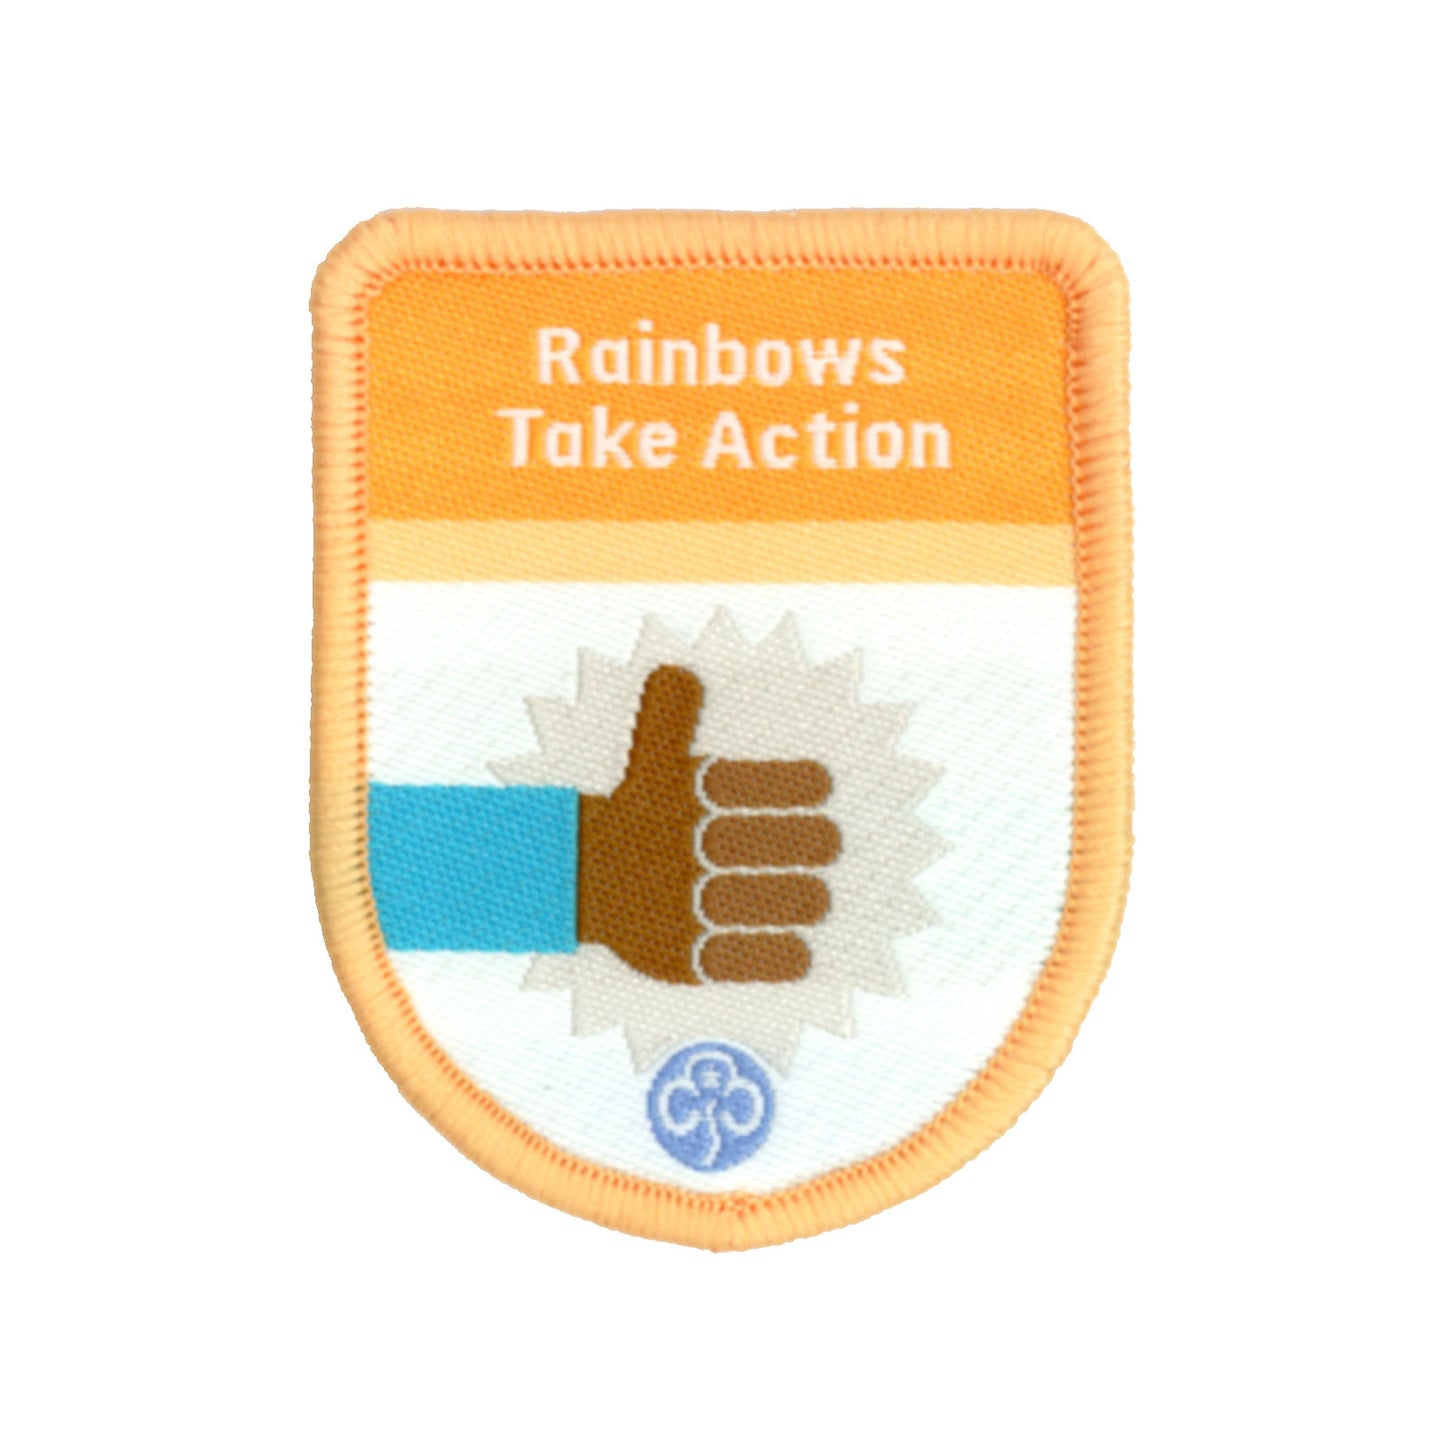 Rainbows Take Action Theme Award Woven Badge